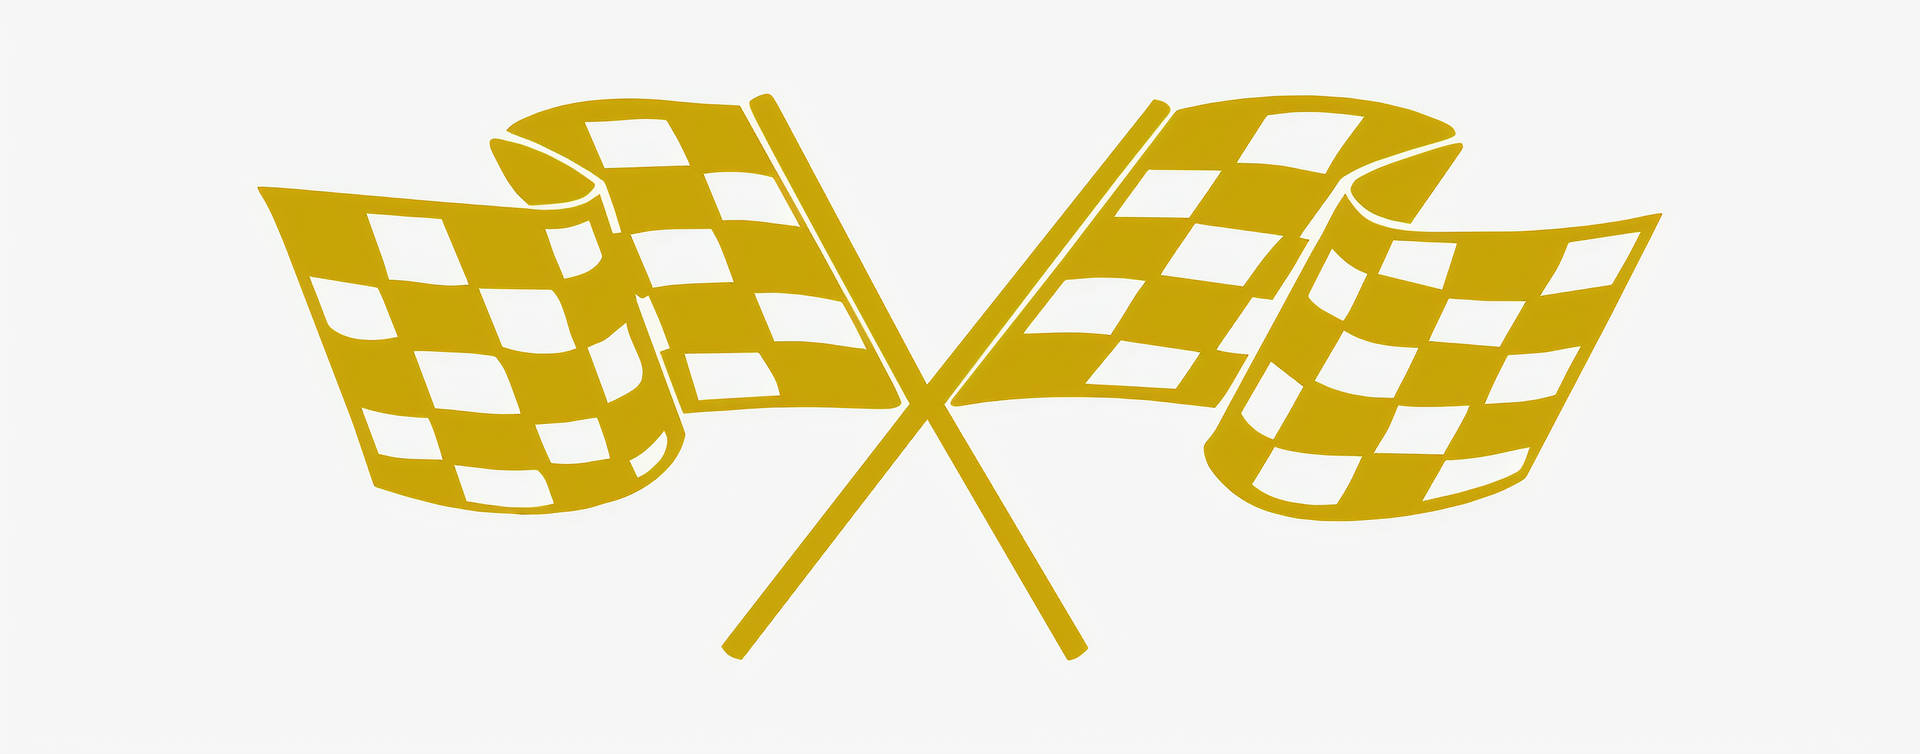 Gold Checkered Flags Wallpaper